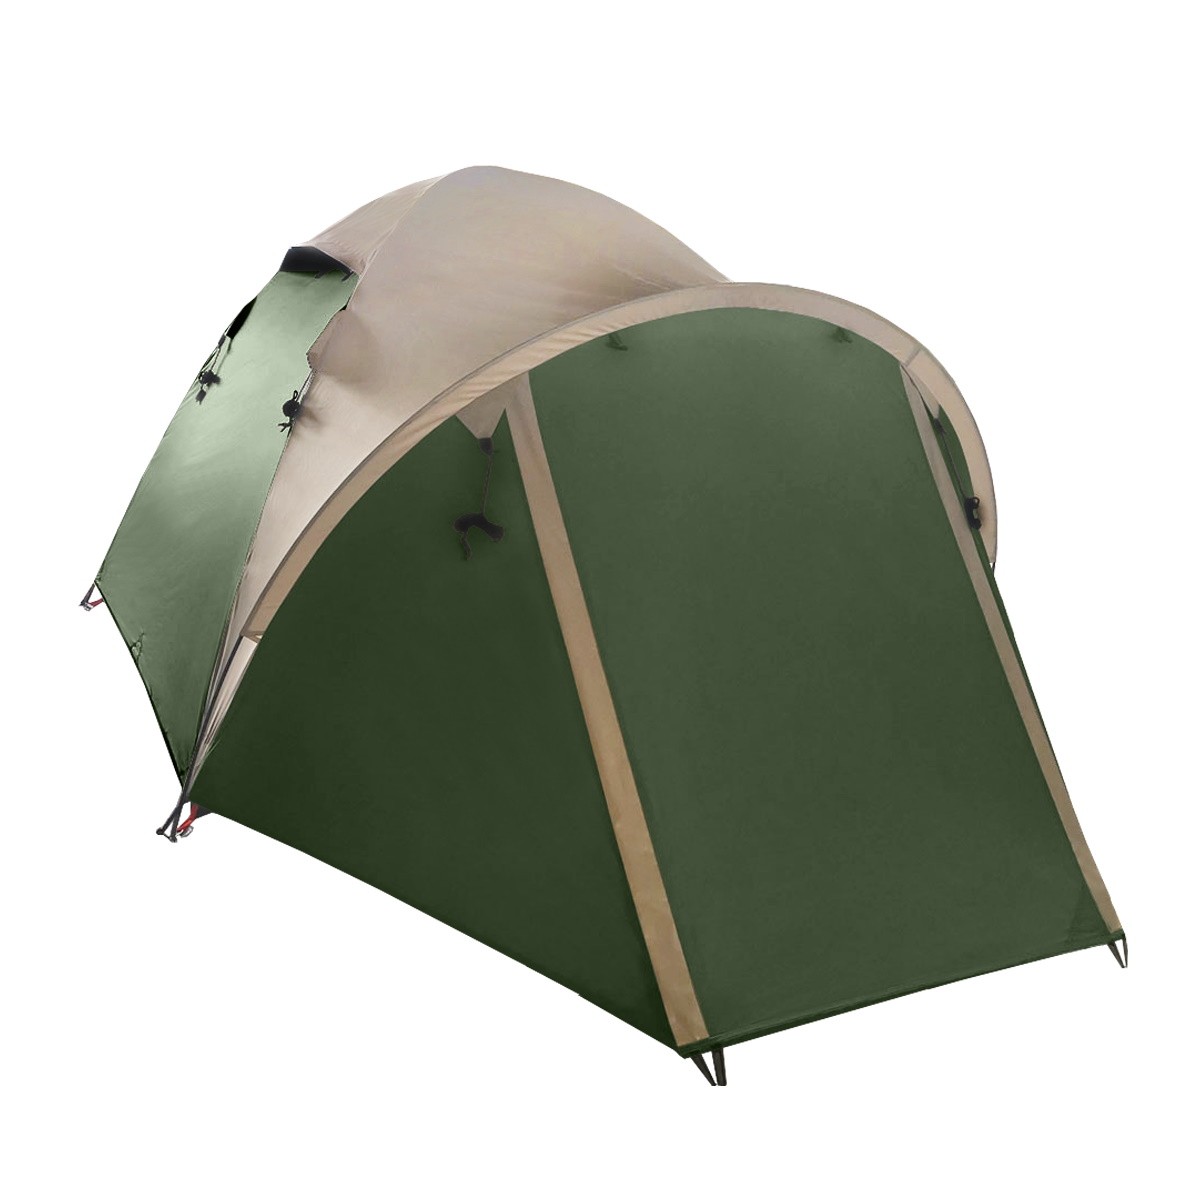 Палатка BTrace Canio 4 зеленый/бежевый - фото 1